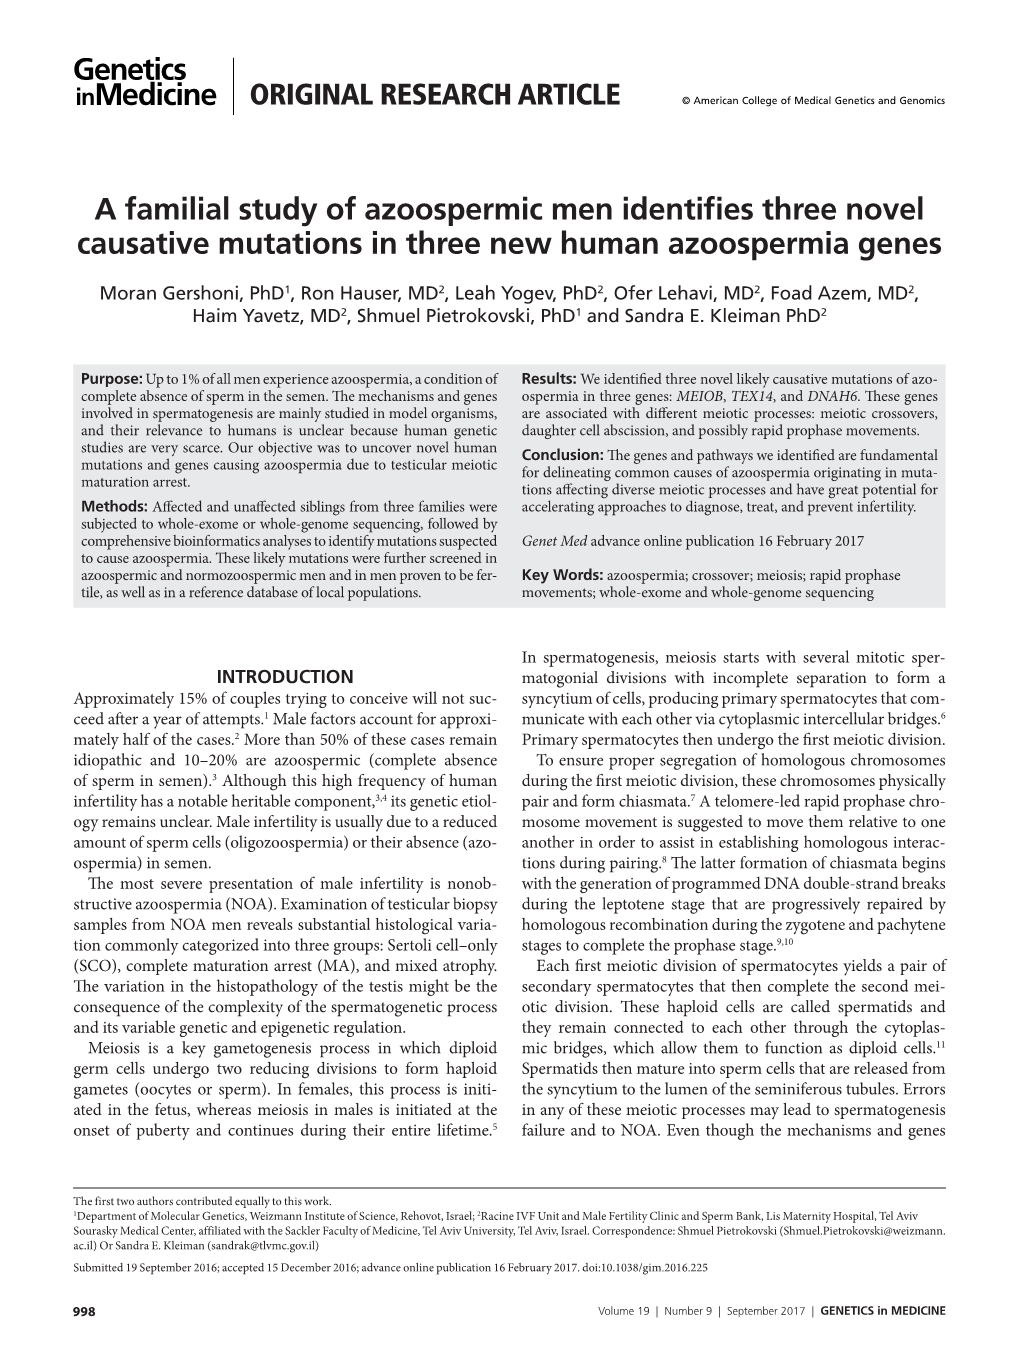 A Familial Study of Azoospermic Men Identifies Three Novel Causative Mutations in Three New Human Azoospermia Genes